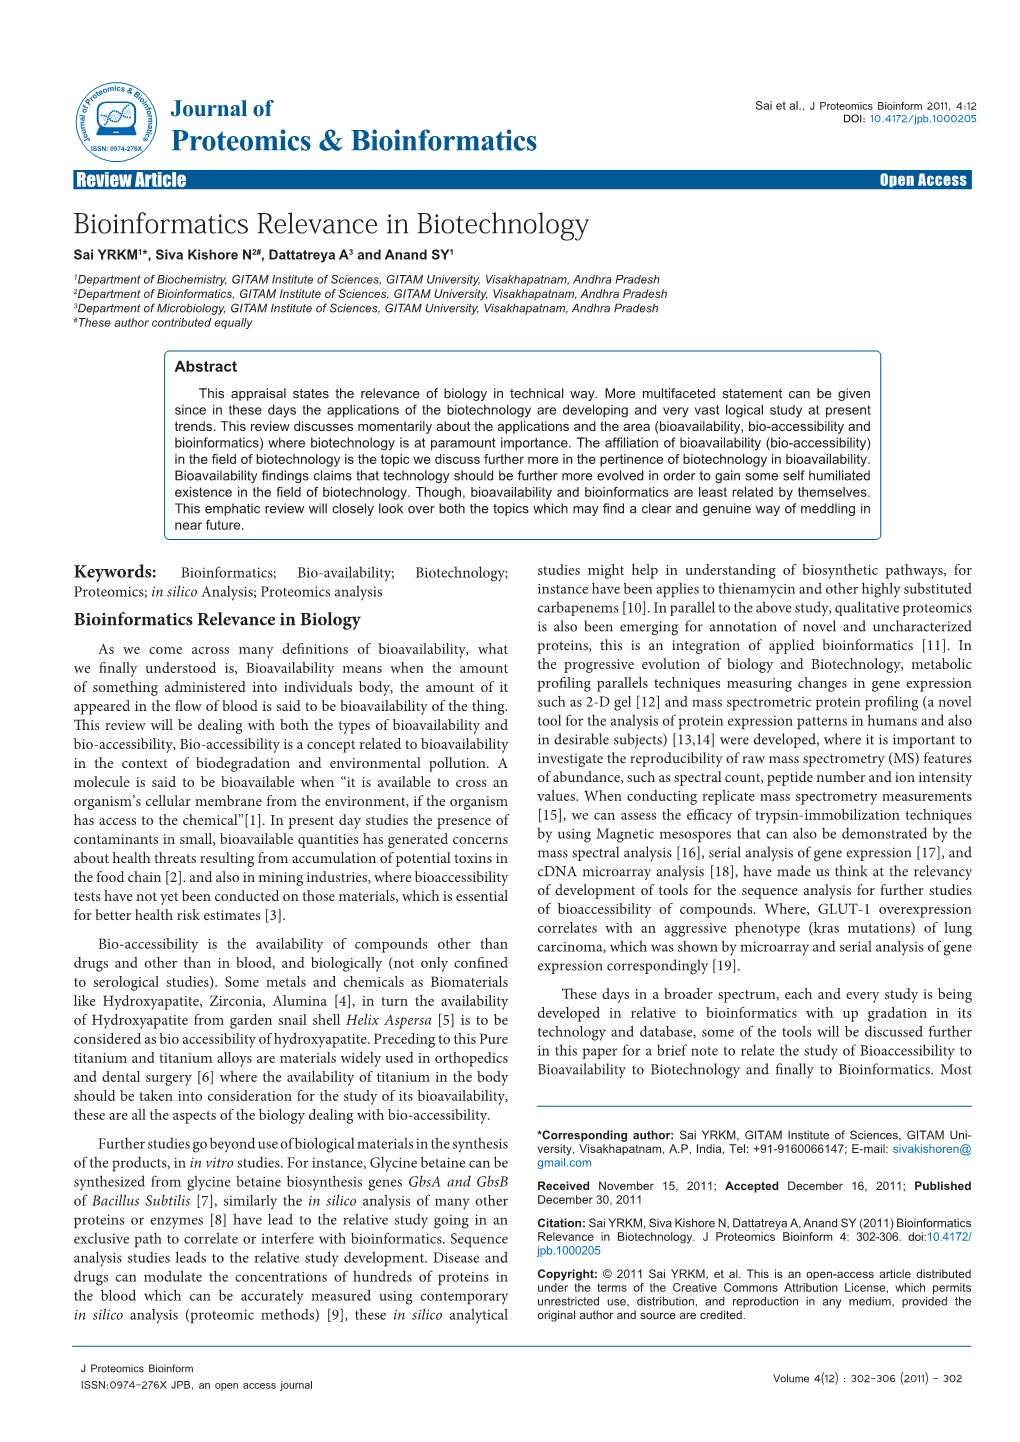 Bioinformatics Relevance in Biotechnology